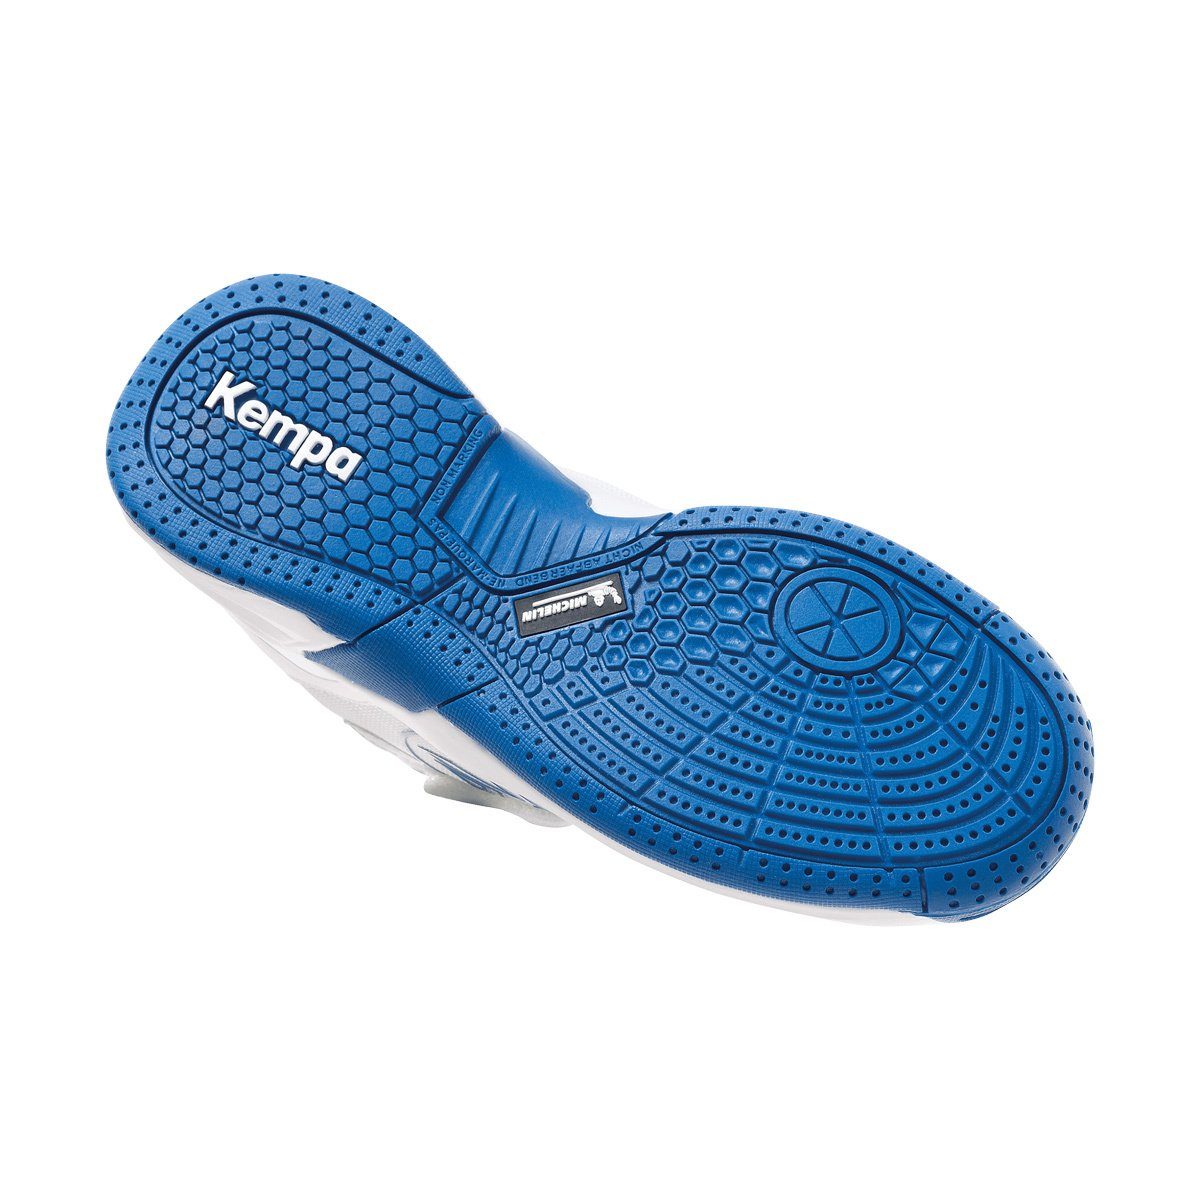 Hallenschuh Kempa Hallen-Sport-Schuhe blau weiß/classic Kempa